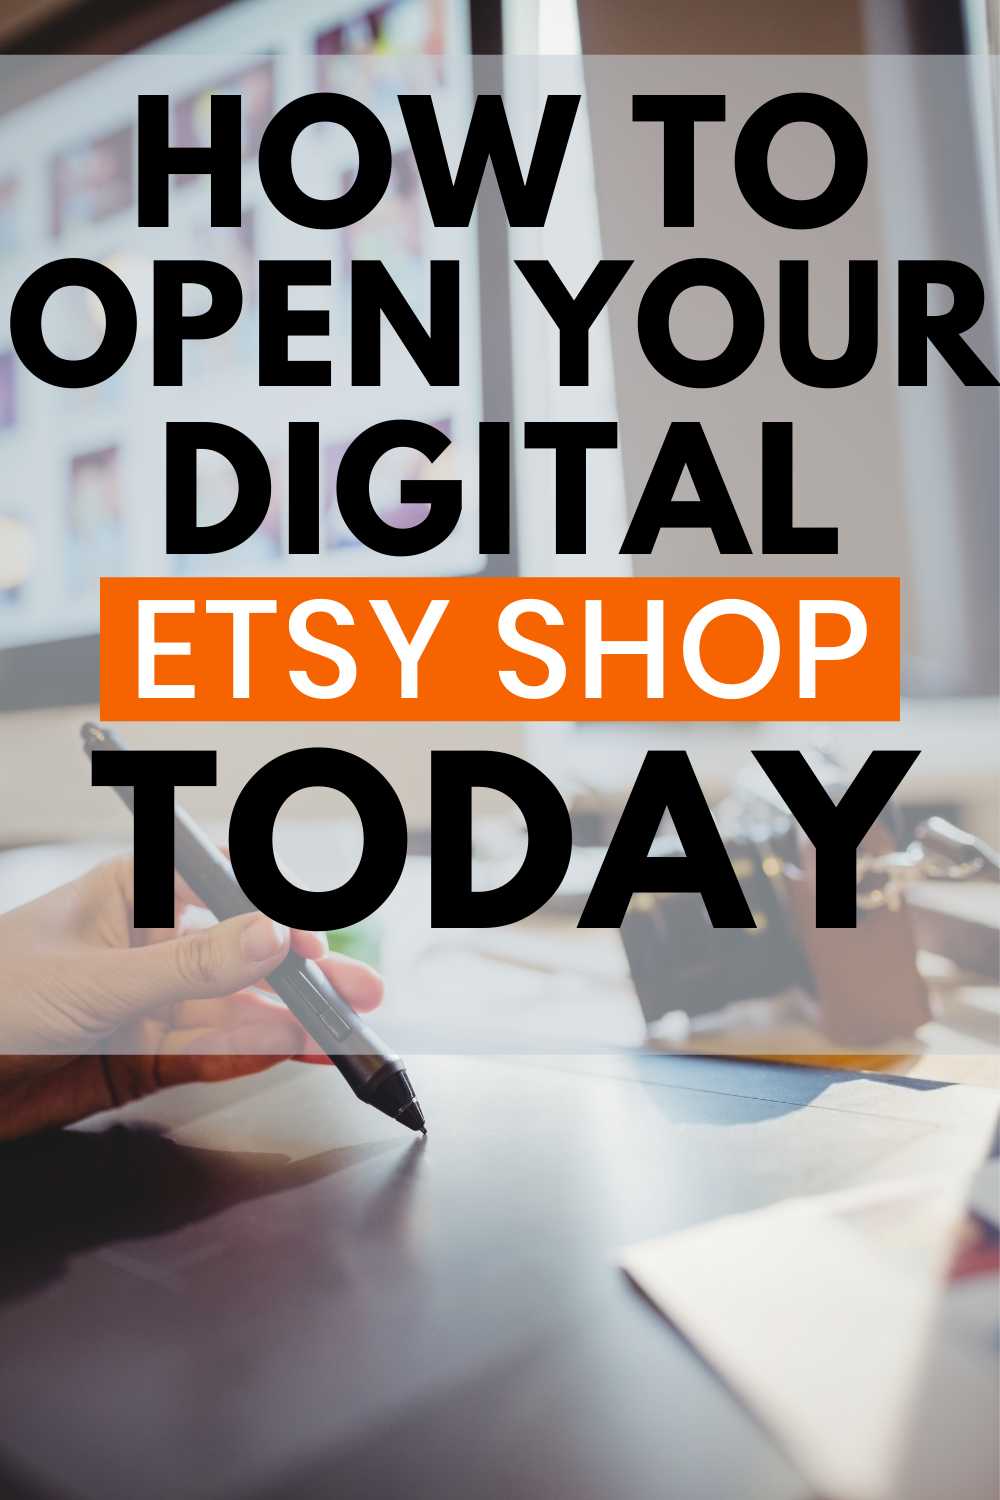 Launch your Digital Etsy Shop